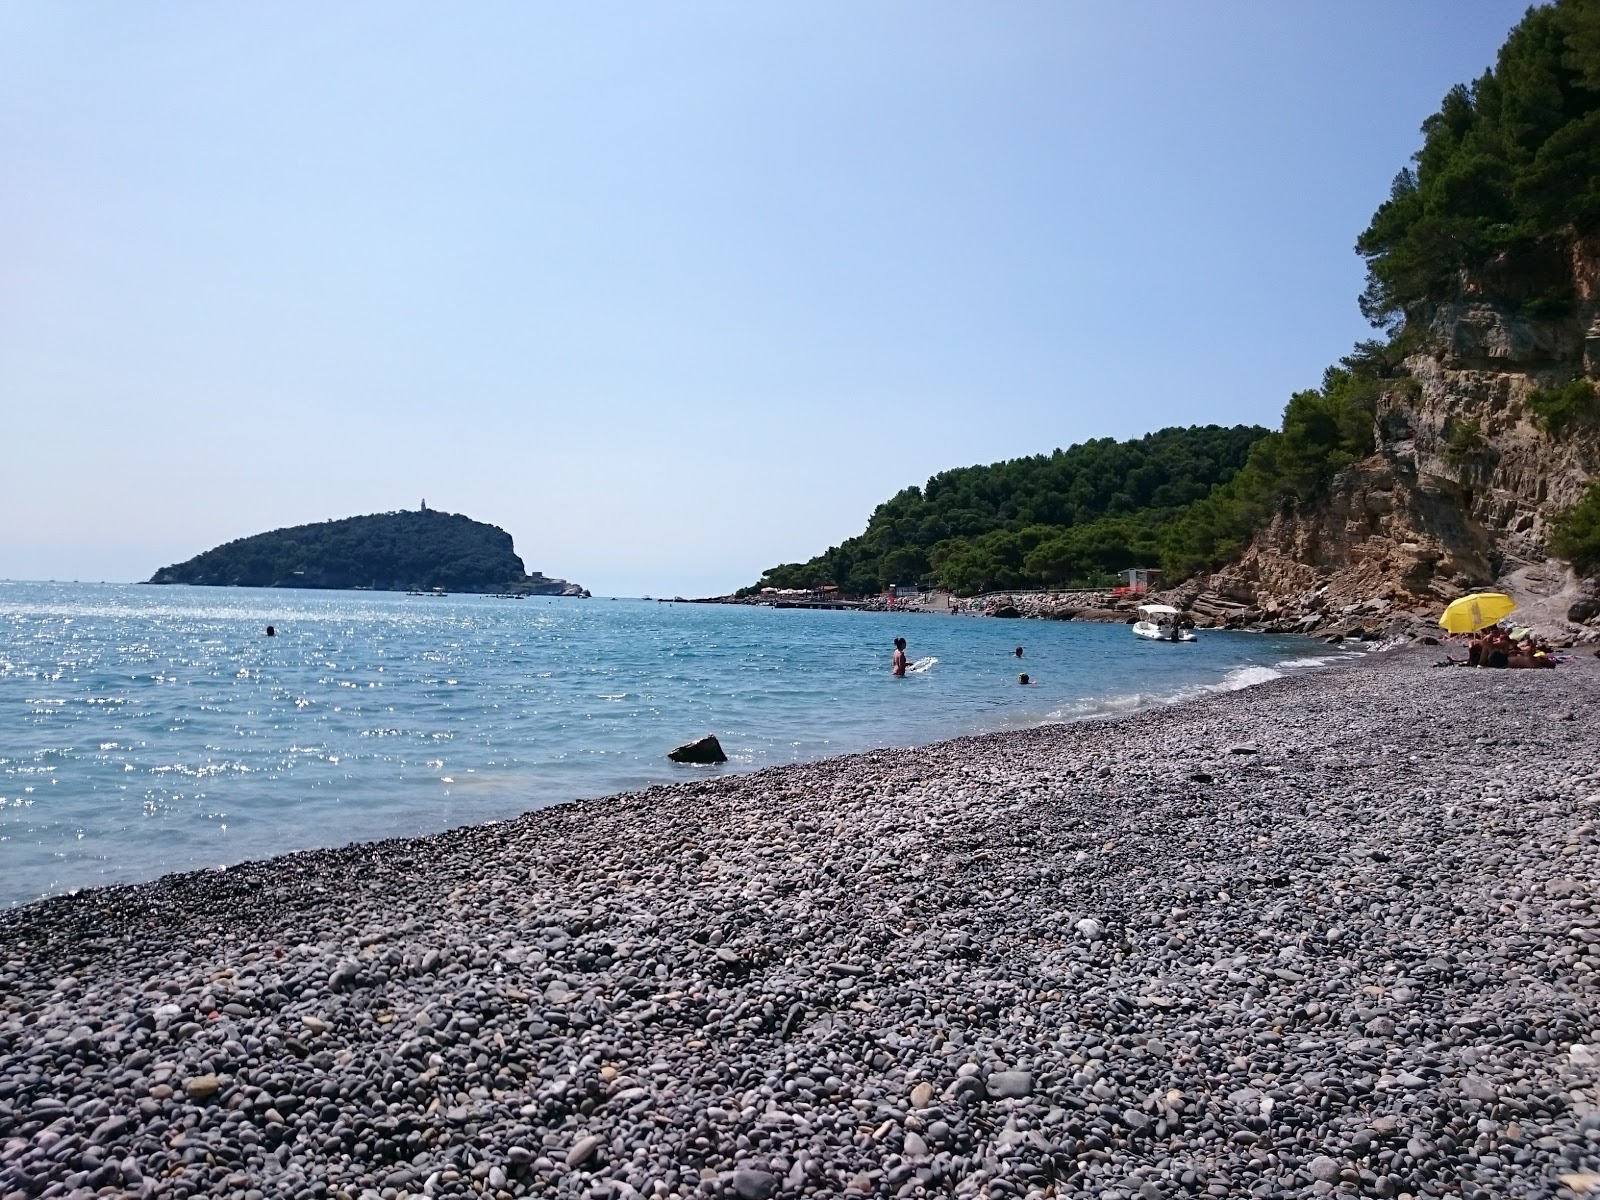 Fotografija Spiaggia dei Gabbiani z sivi kamenček površino